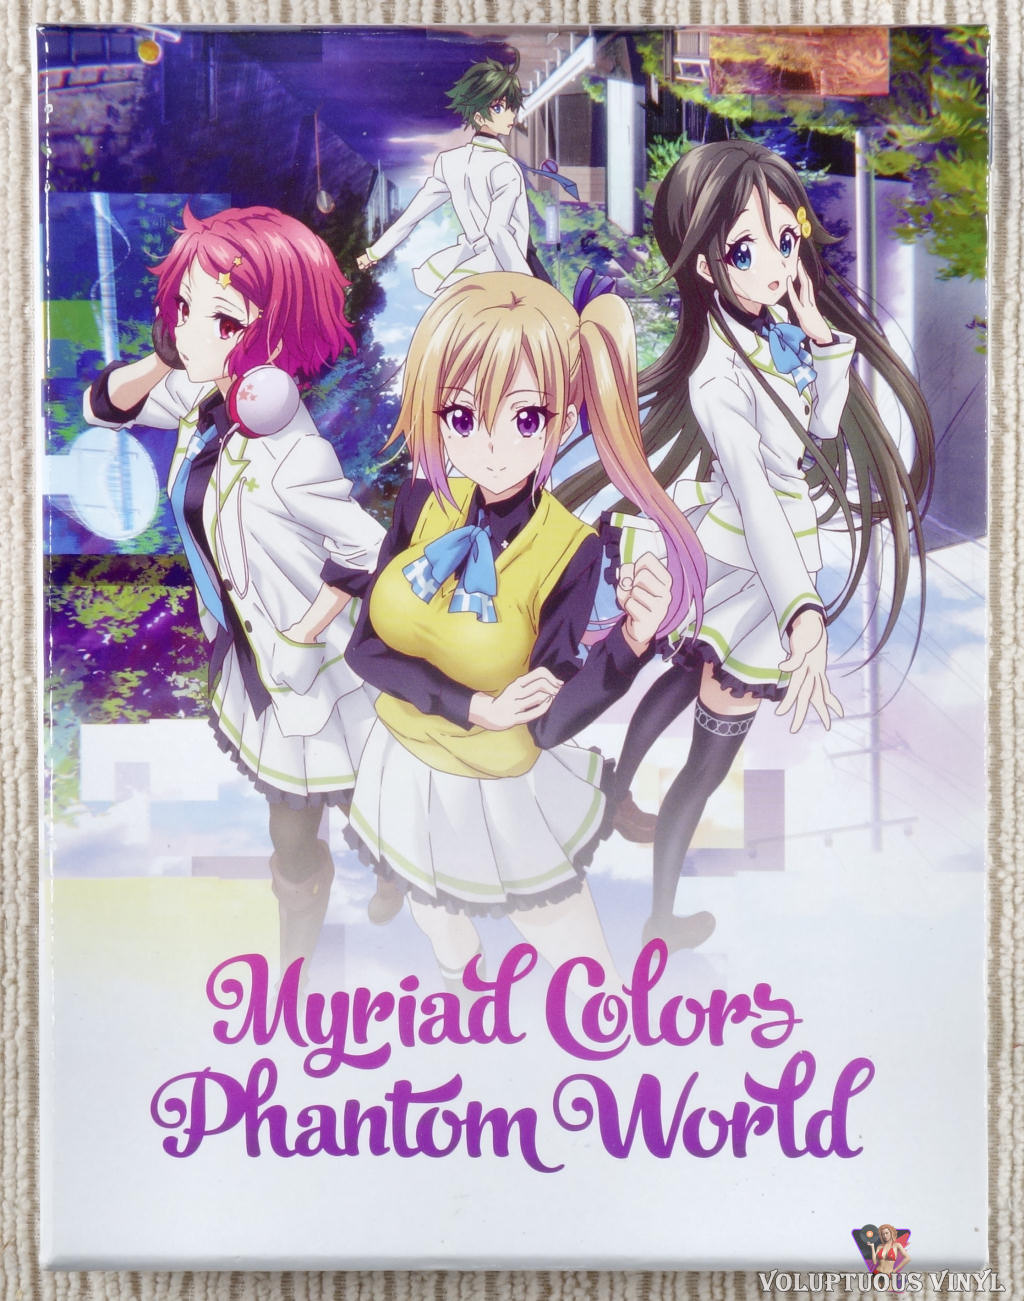 Funimation Reveals Myriad Colors Phantom World Anime's English Dub Cast -  News - Anime News Network